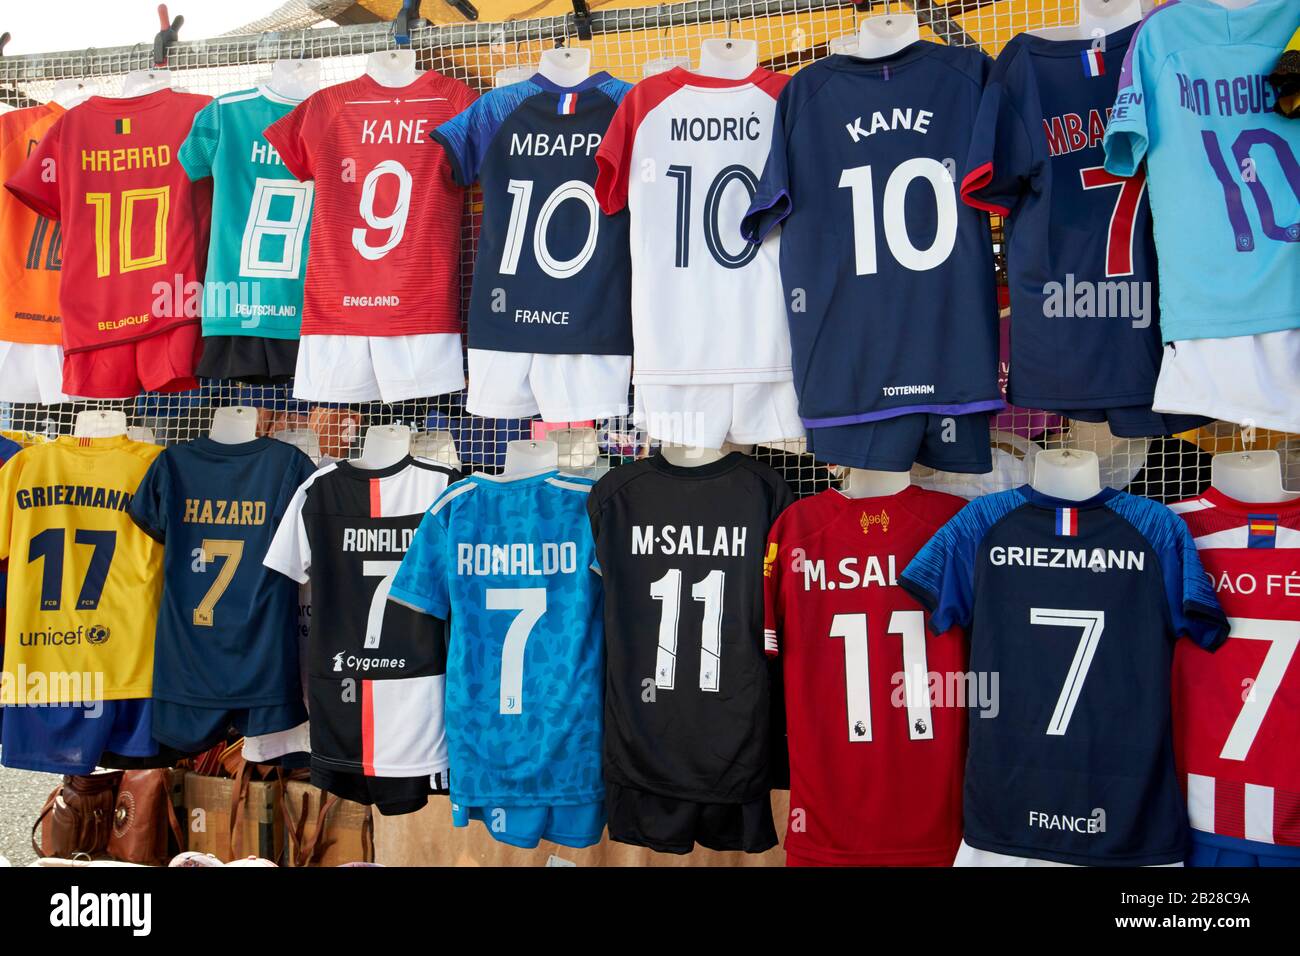 Ropa de futbol Fotos e Imágenes de stock - Alamy